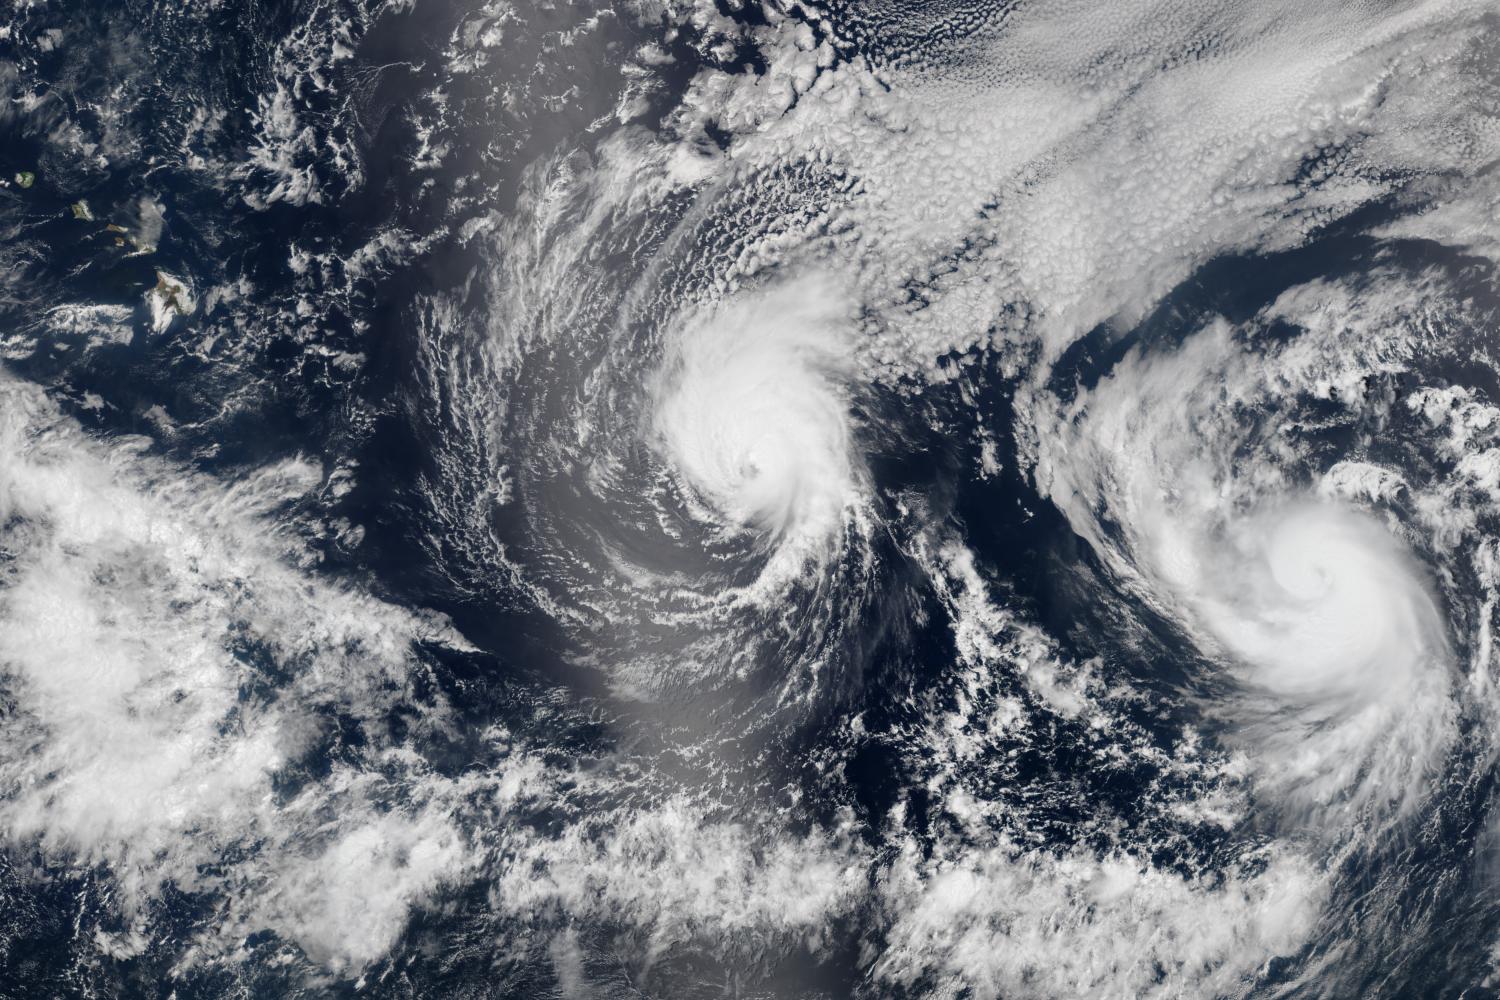 Satellite+view+of+Hurricanes+Irma+and+Jose+via+nasa.gov